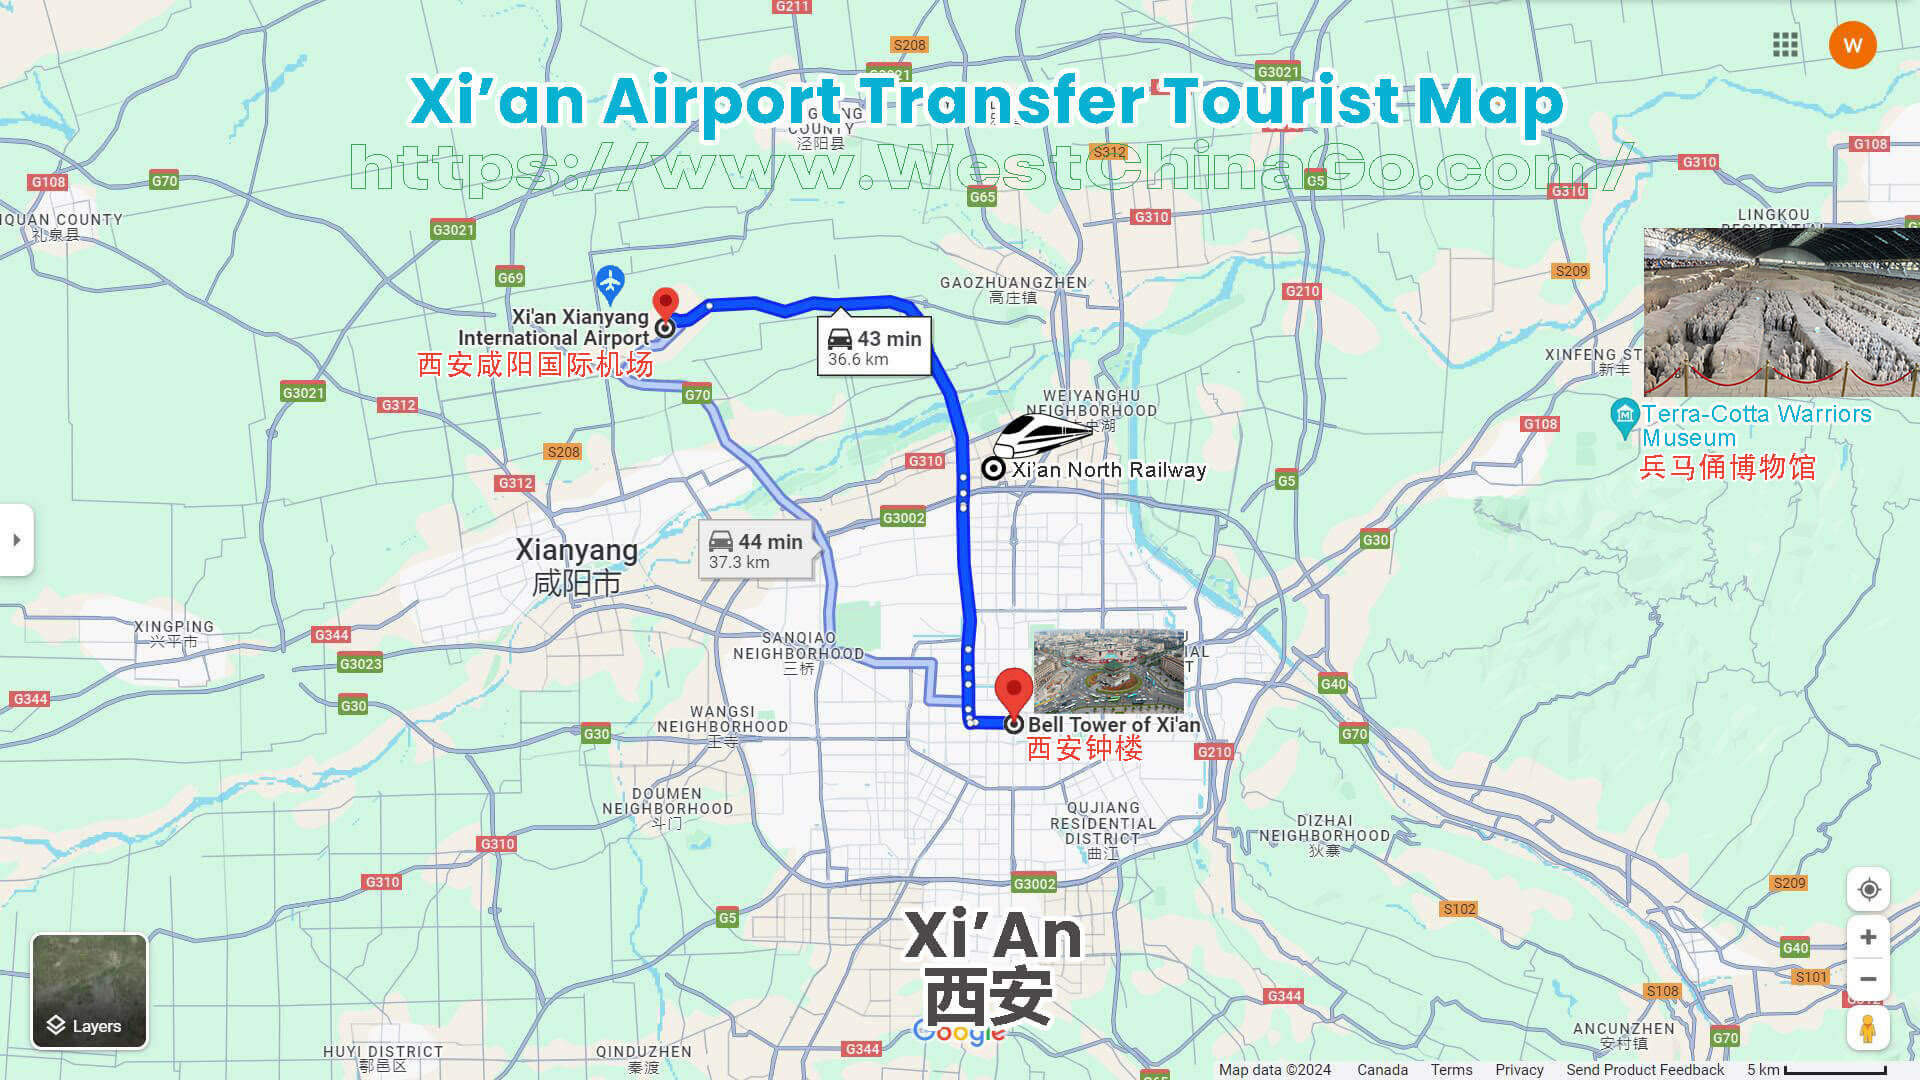 Xi’an Airport Transfer Tourist Map